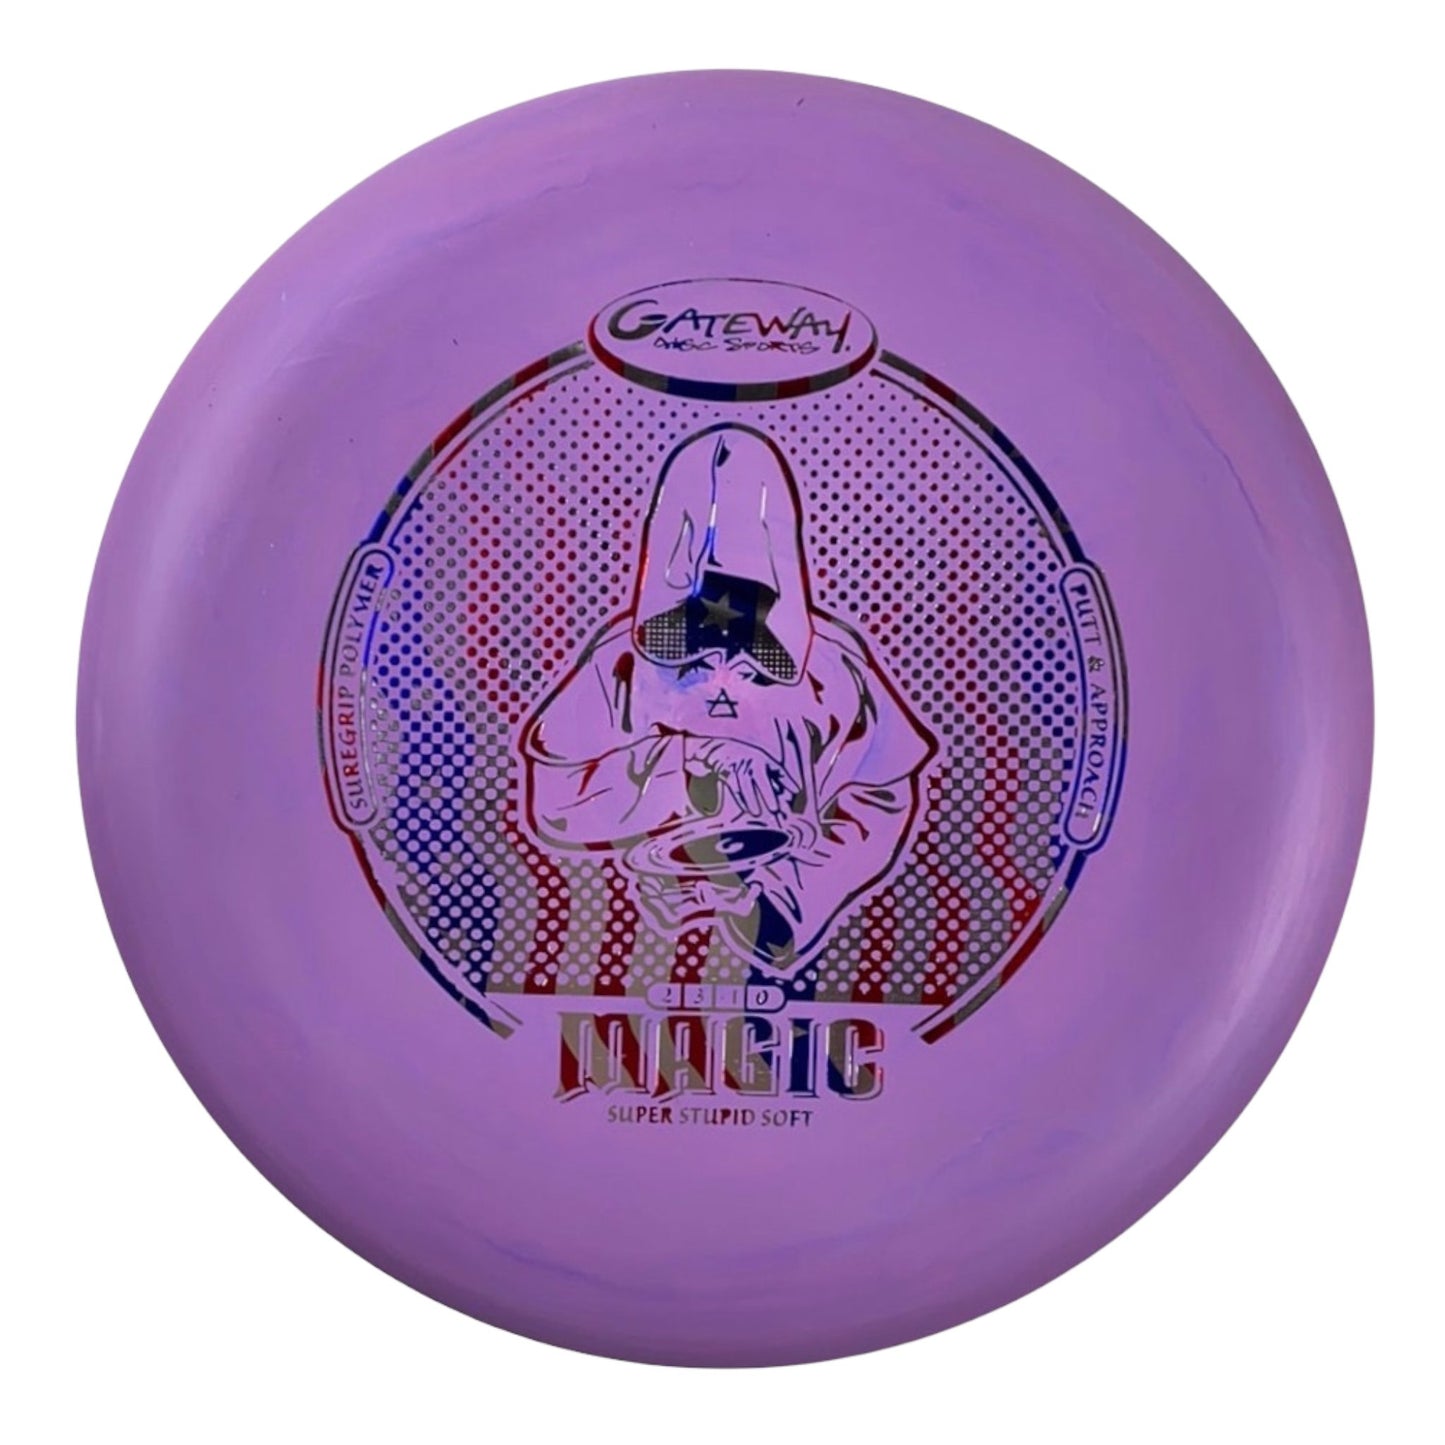 Gateway Disc Sports Magic | Super Stupid Soft (SSS) | Purple/USA 174g Disc Golf